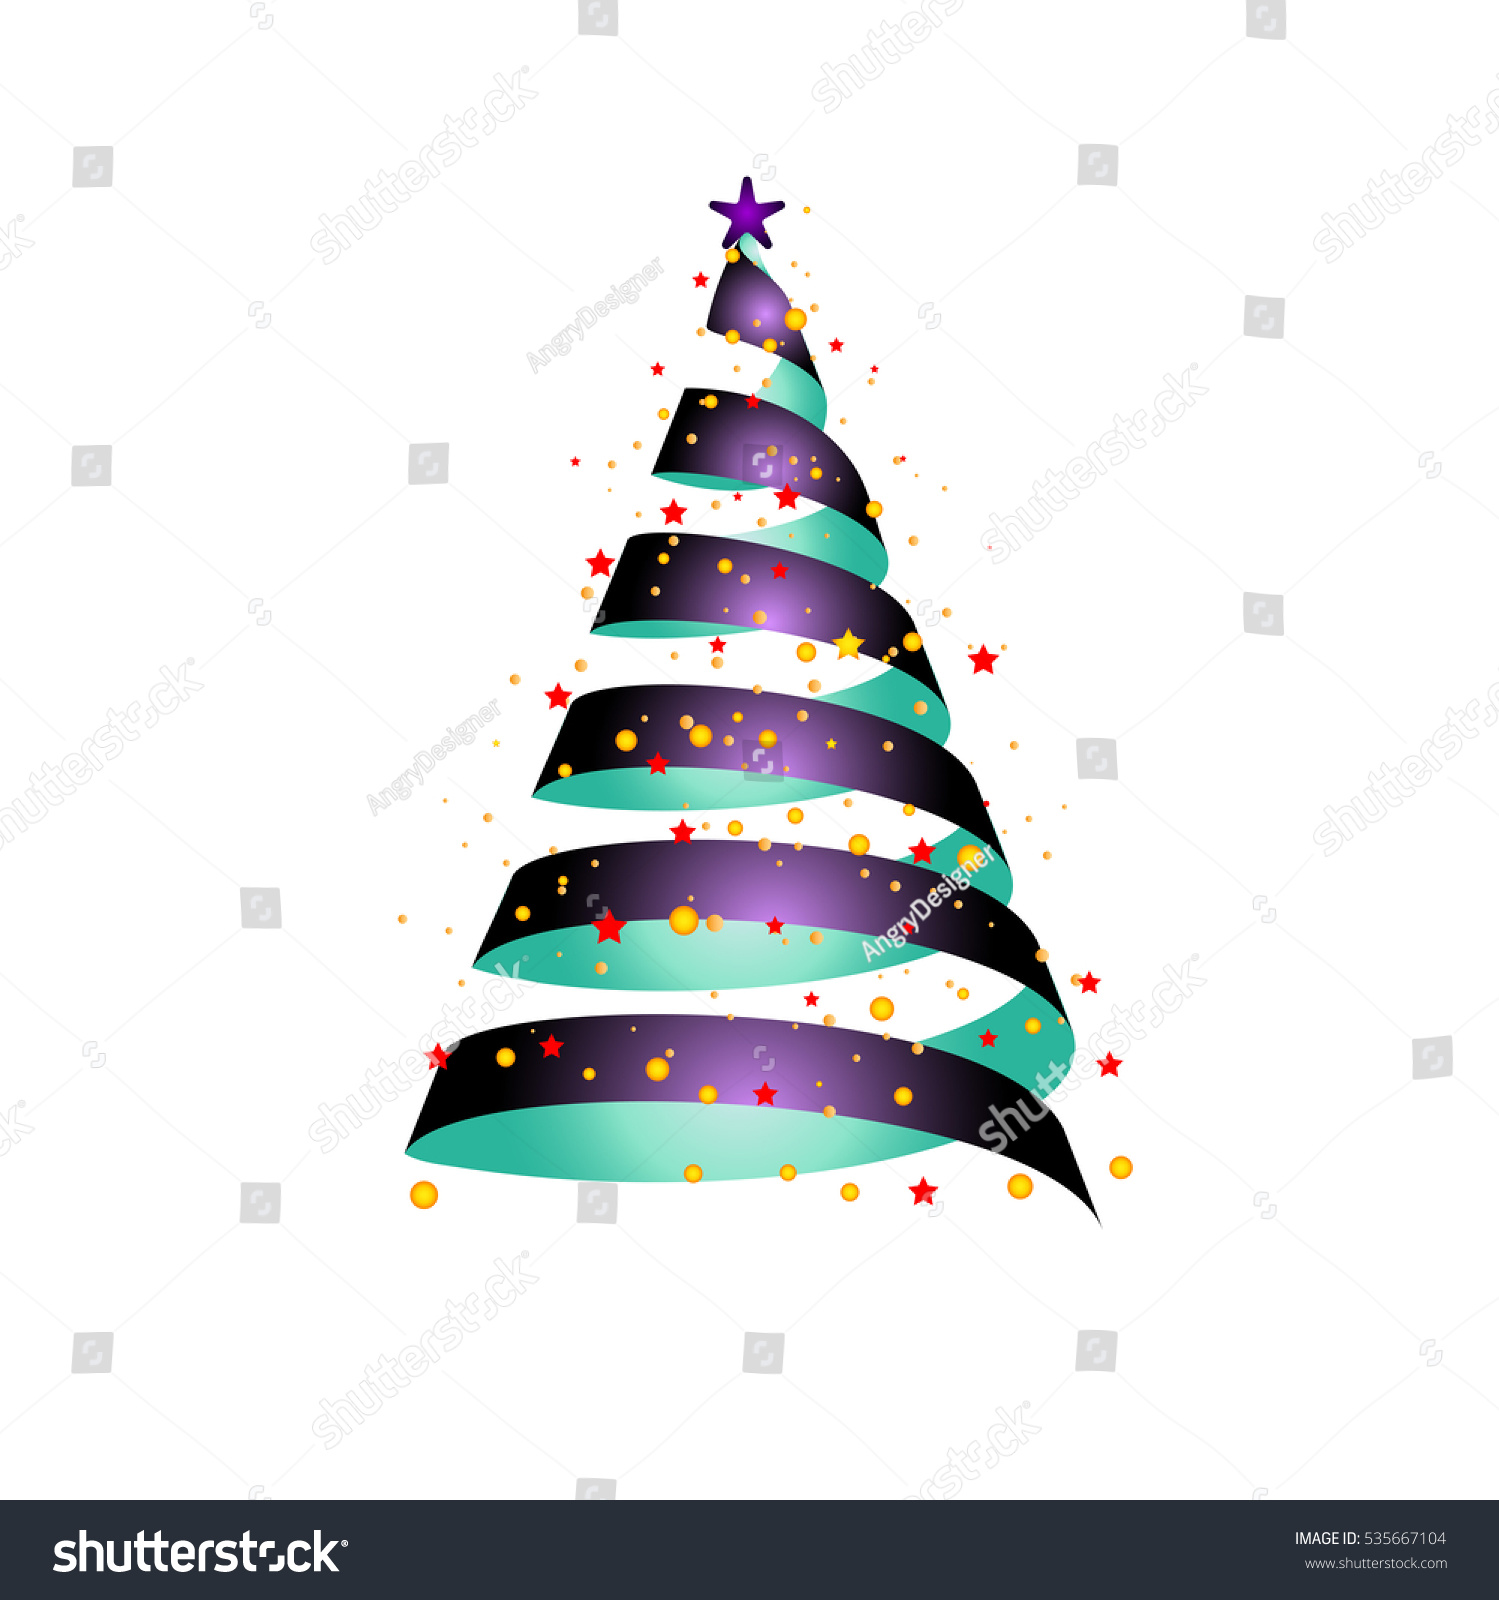 Christmas Background Christmas Tree Vector Illustration Stock Vector 535667104 - Shutterstock